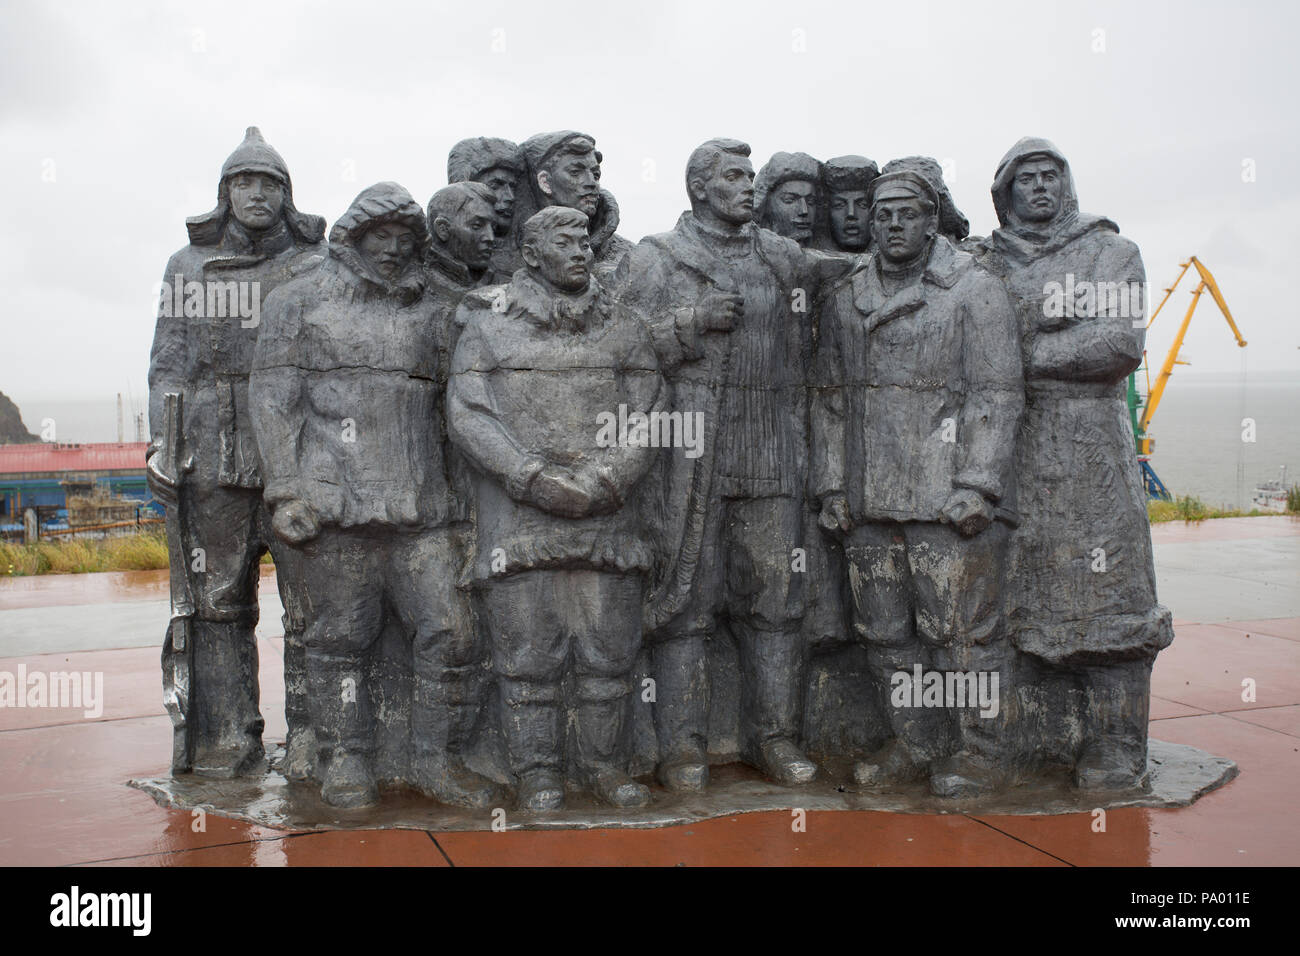 Statue of men in Anadyr, Russia Stock Photo